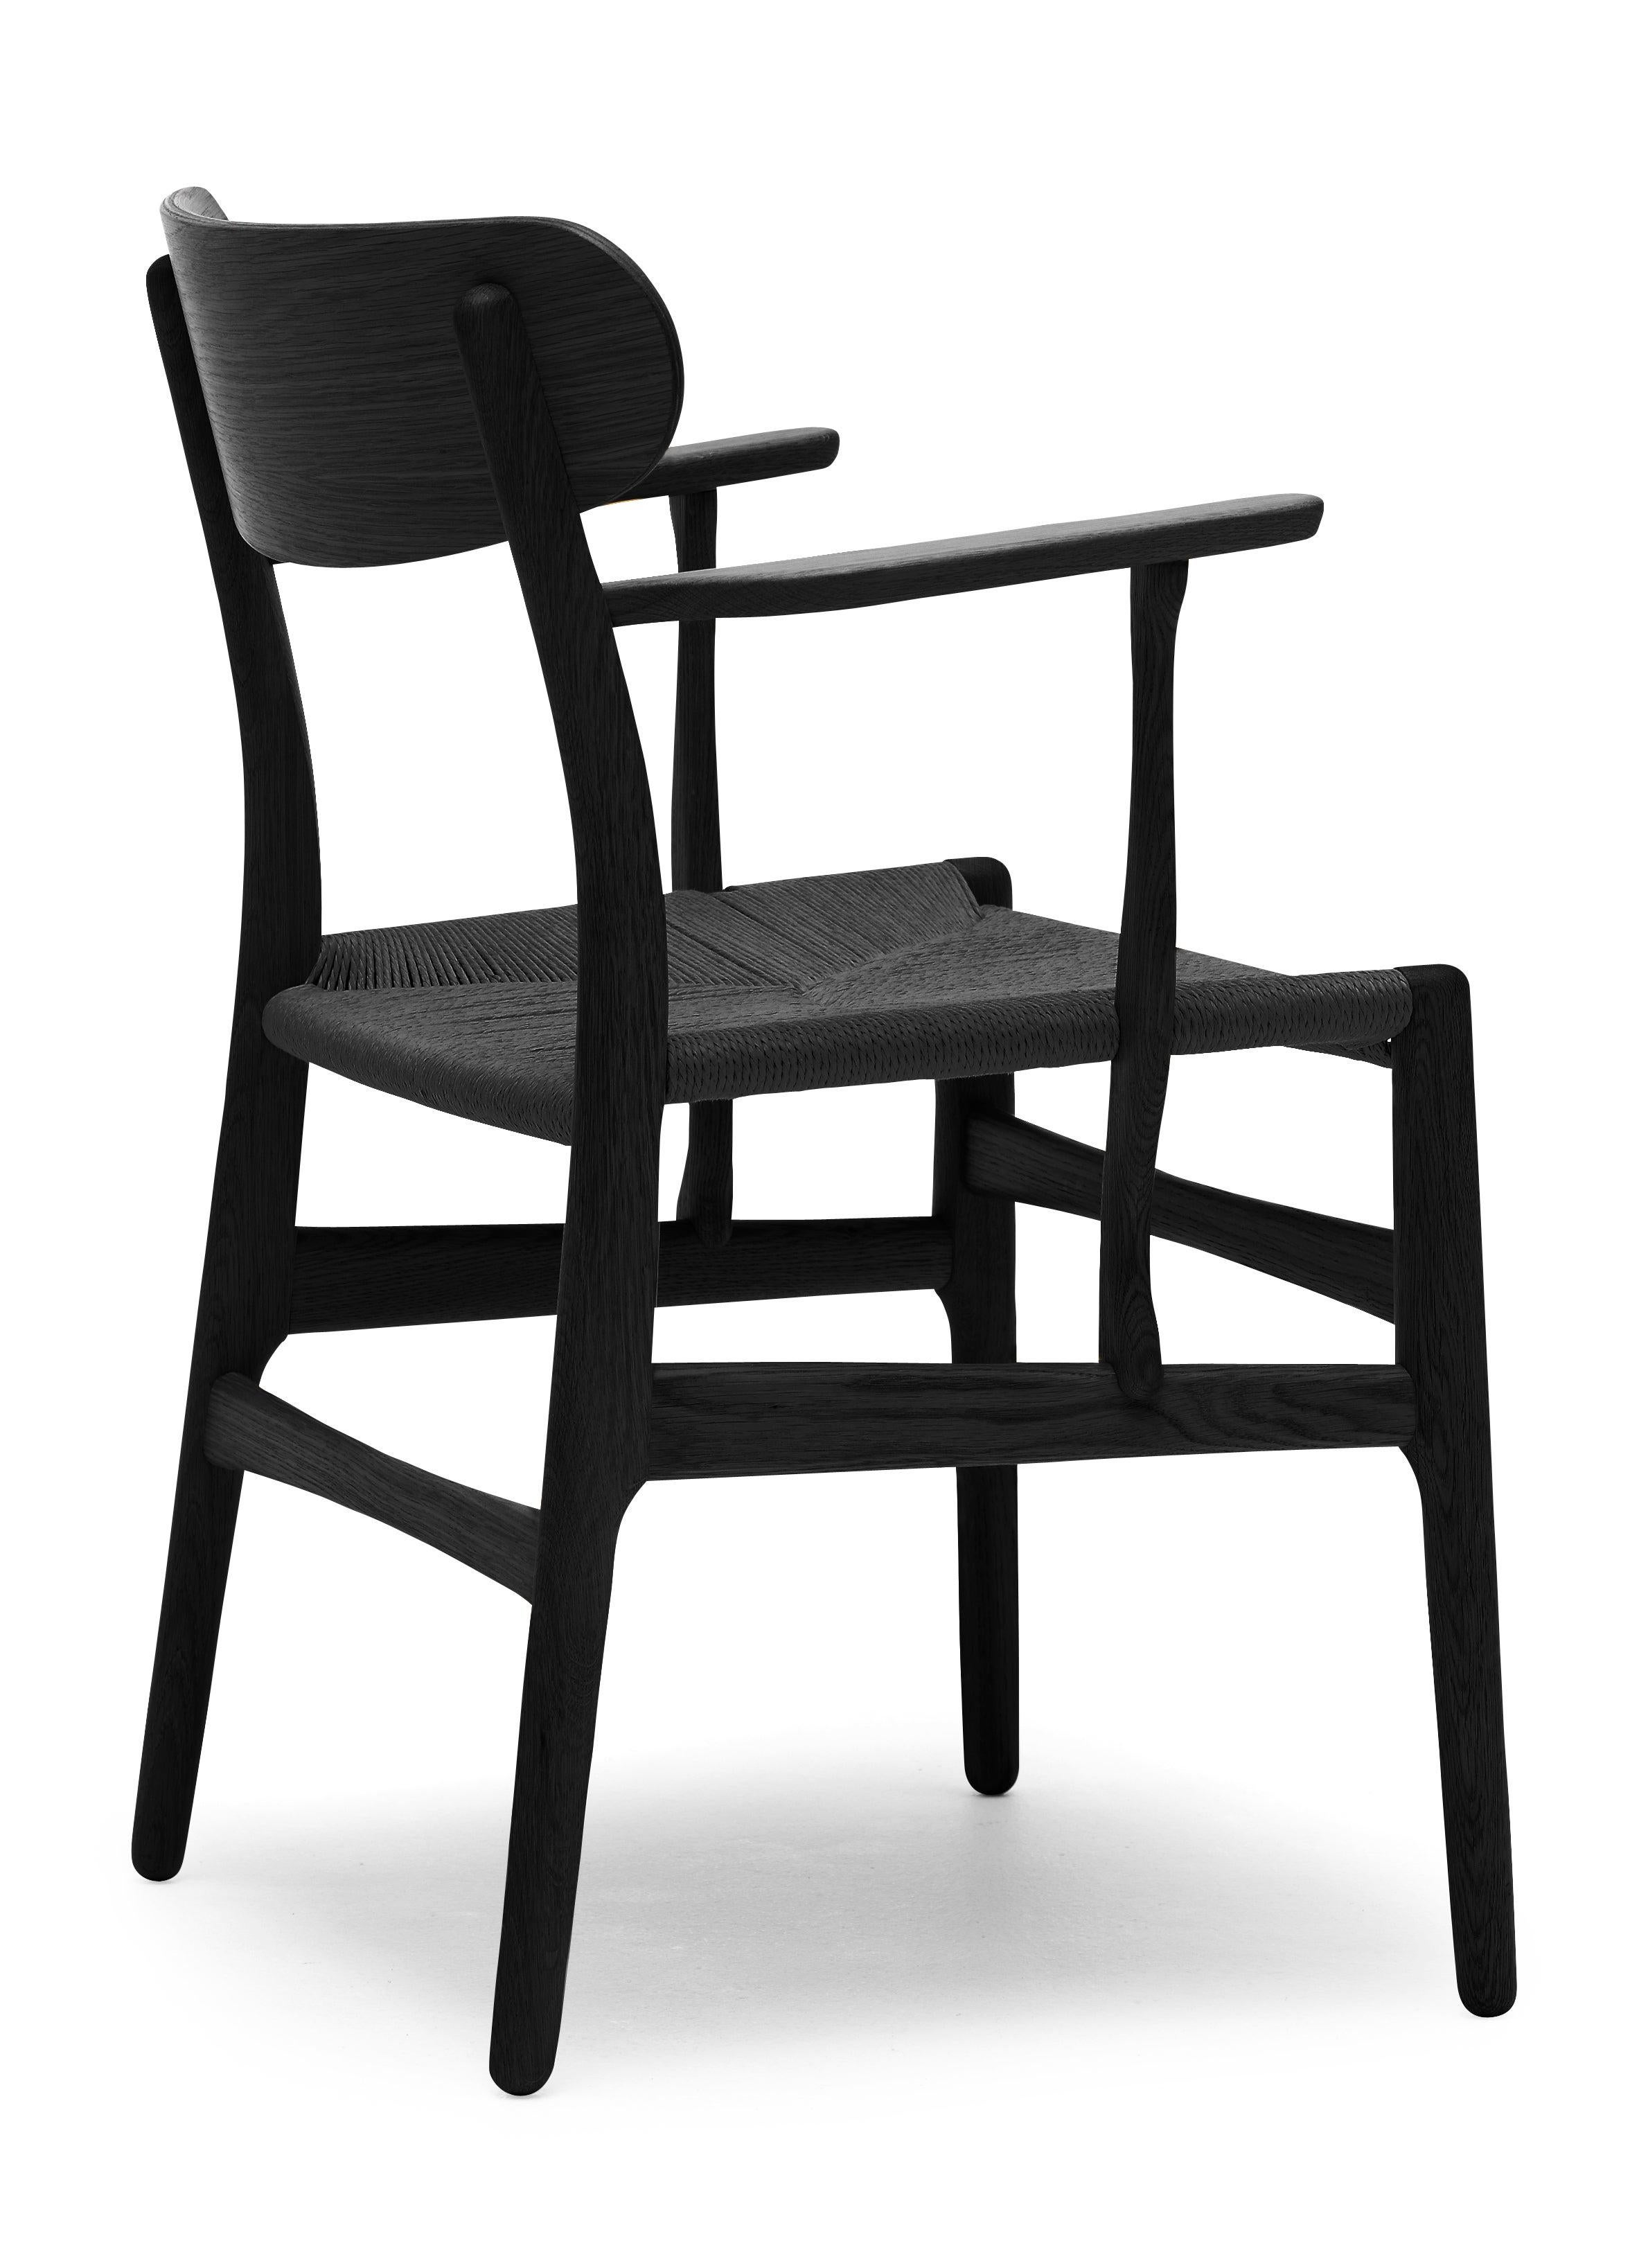 Modern CH26 Dining Chair in Oak Painted Black & Black Papercord Seat by Hans J. Wegner